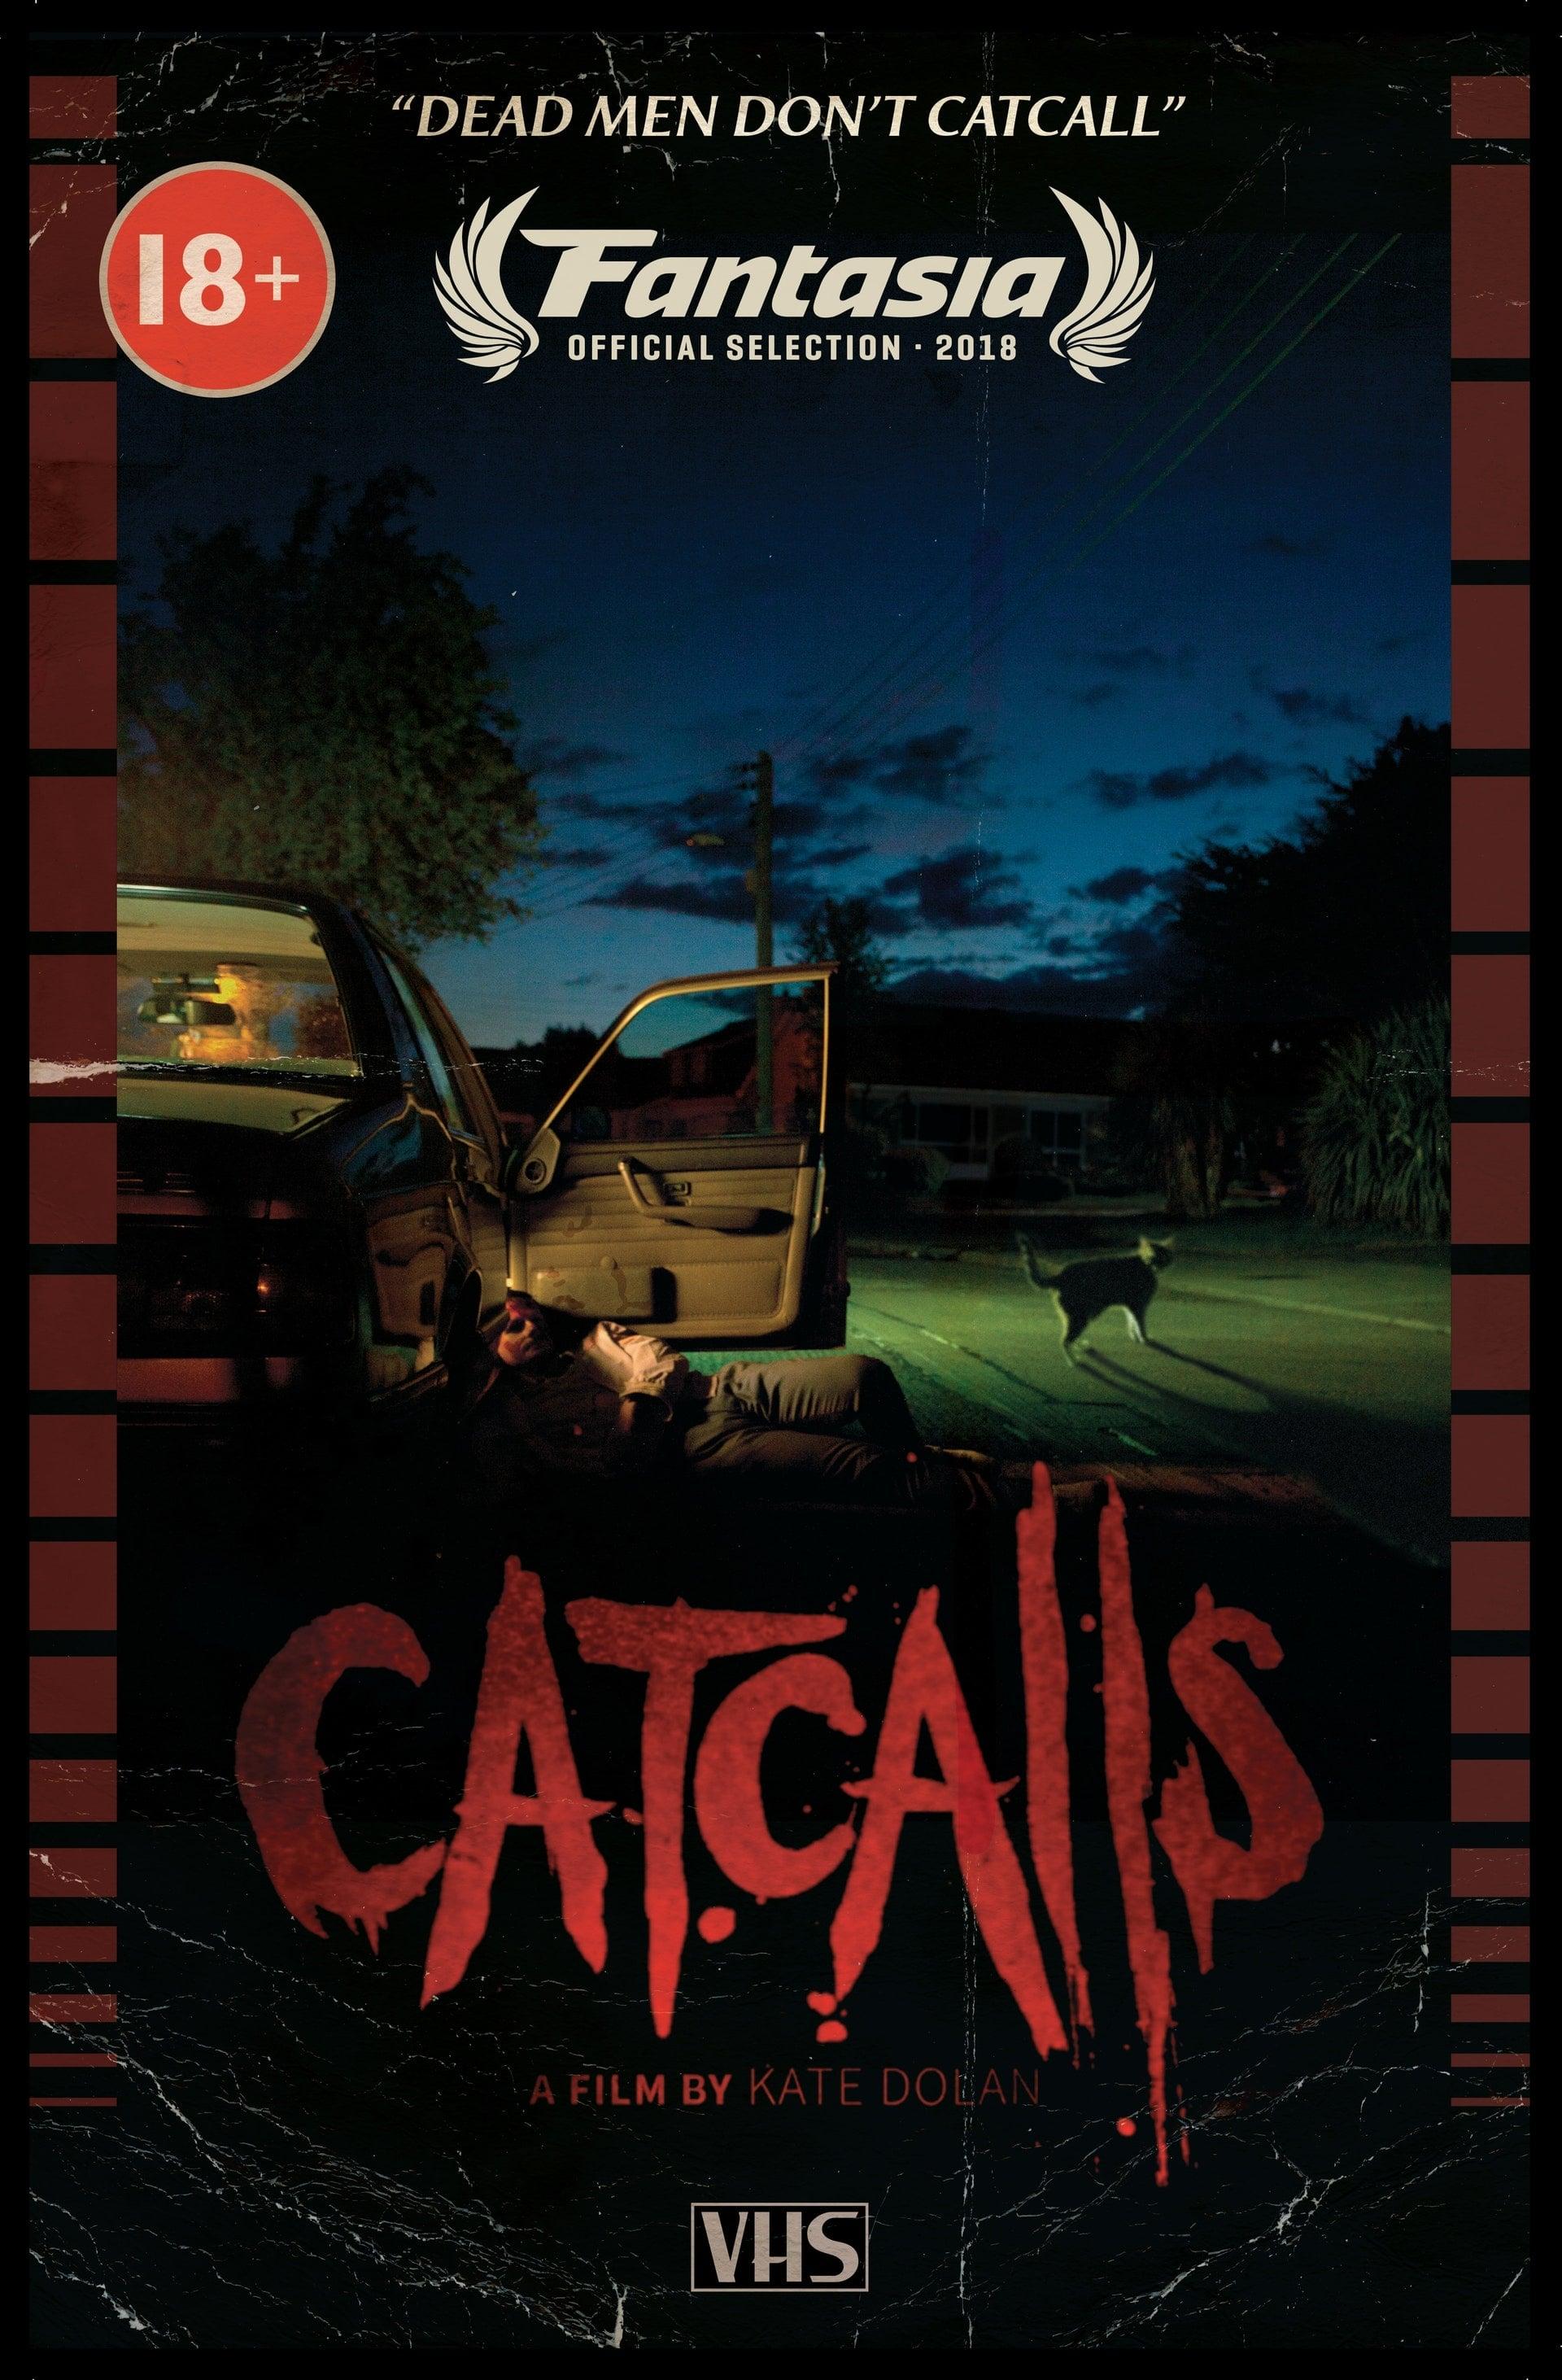 Catcalls poster